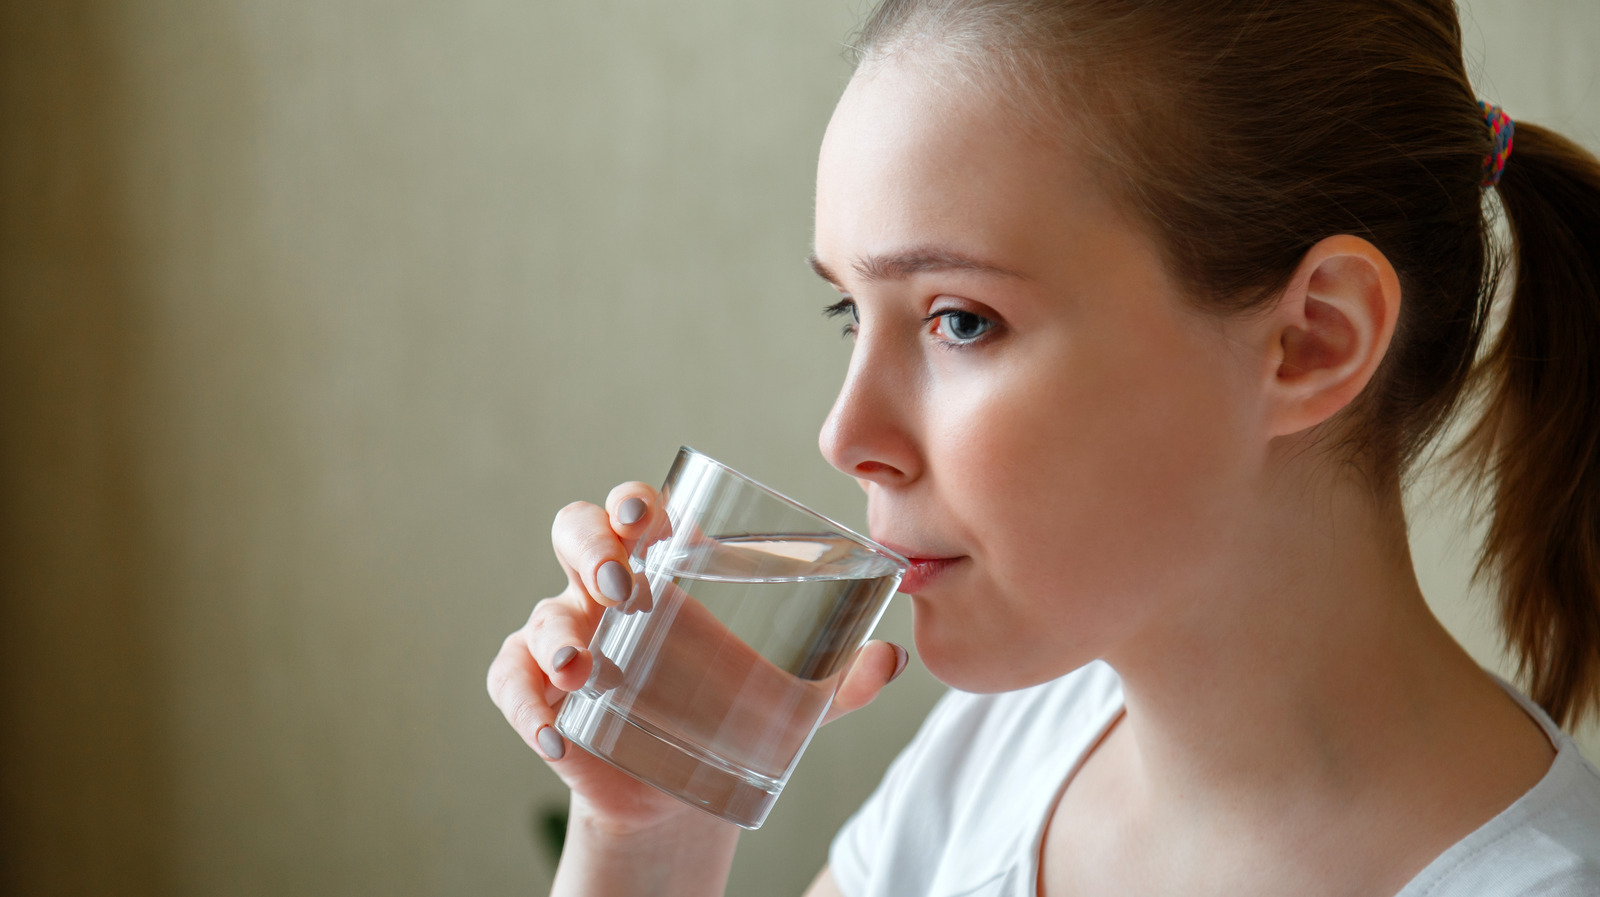 Symptoms Of Dehydration In The Body